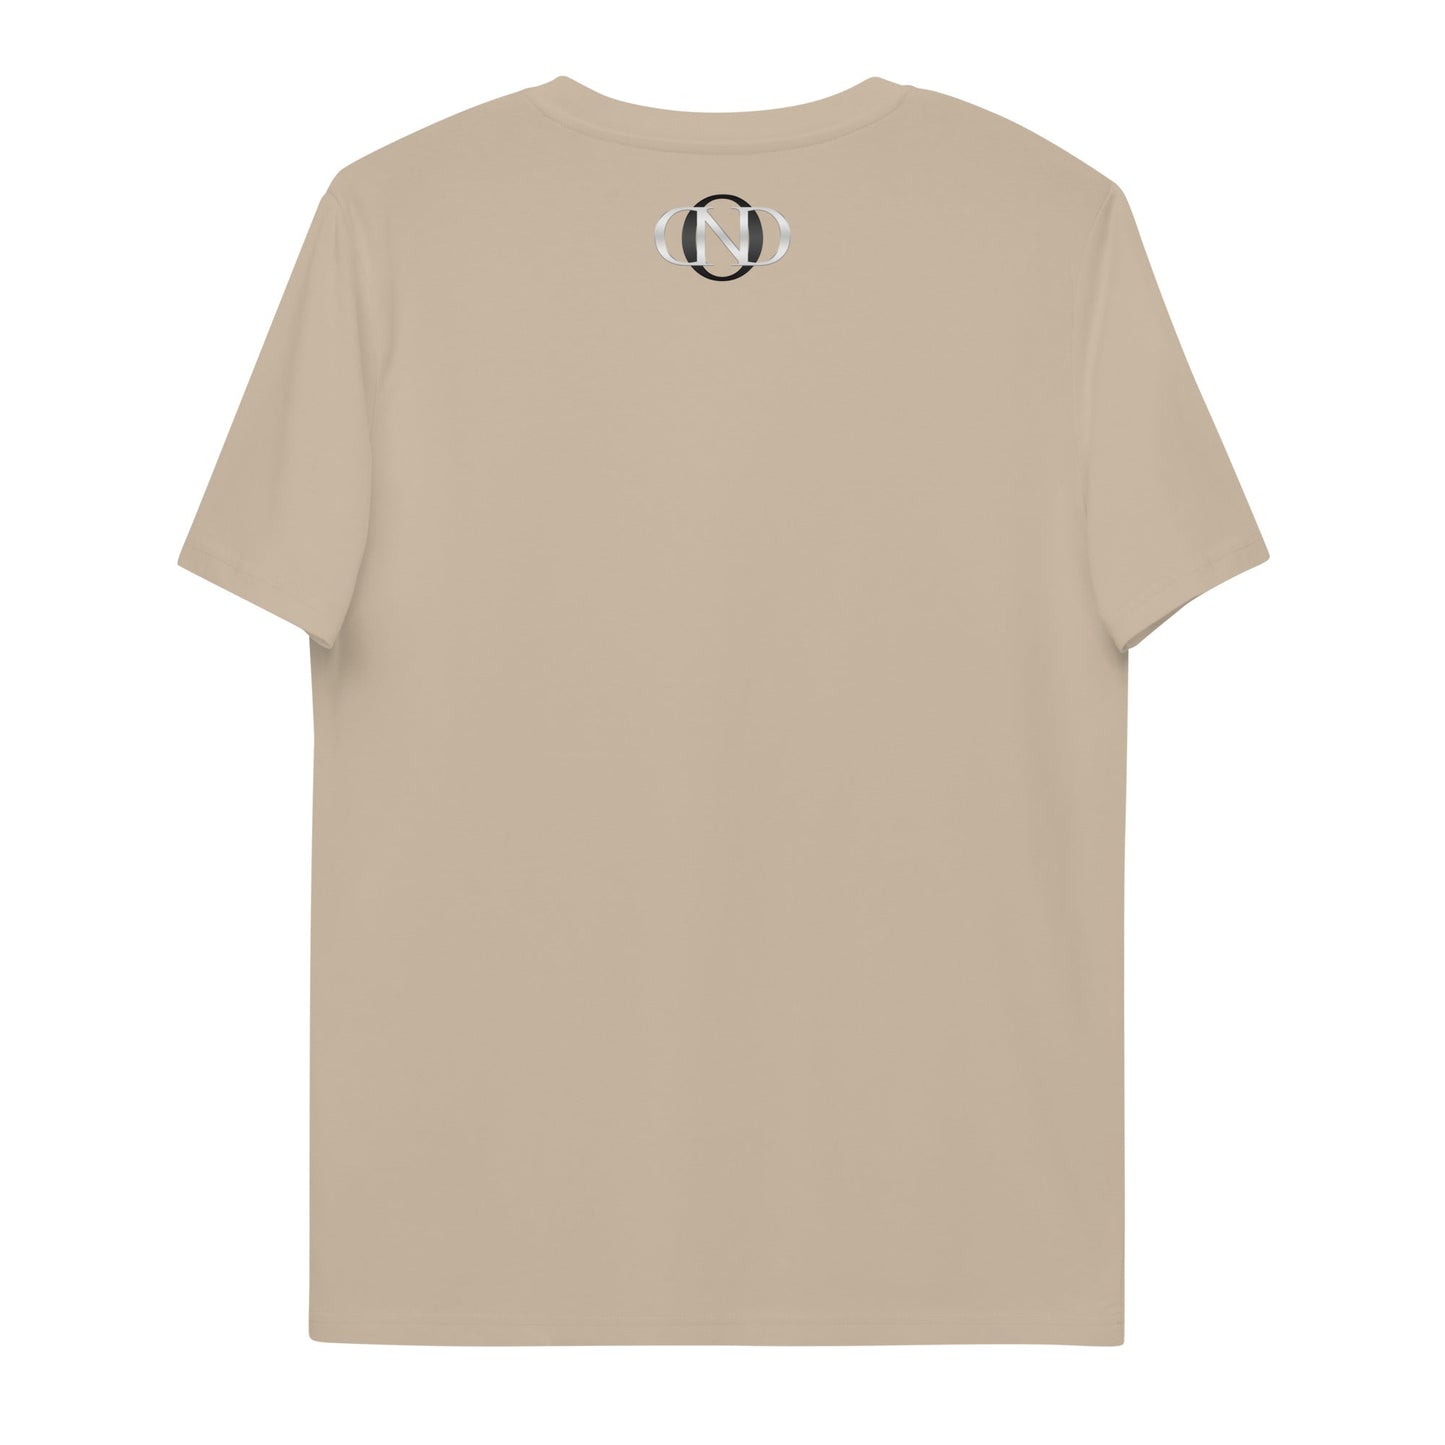 20 Neduz Designs Unisex Socialliberalerna Plain T-Shirt -